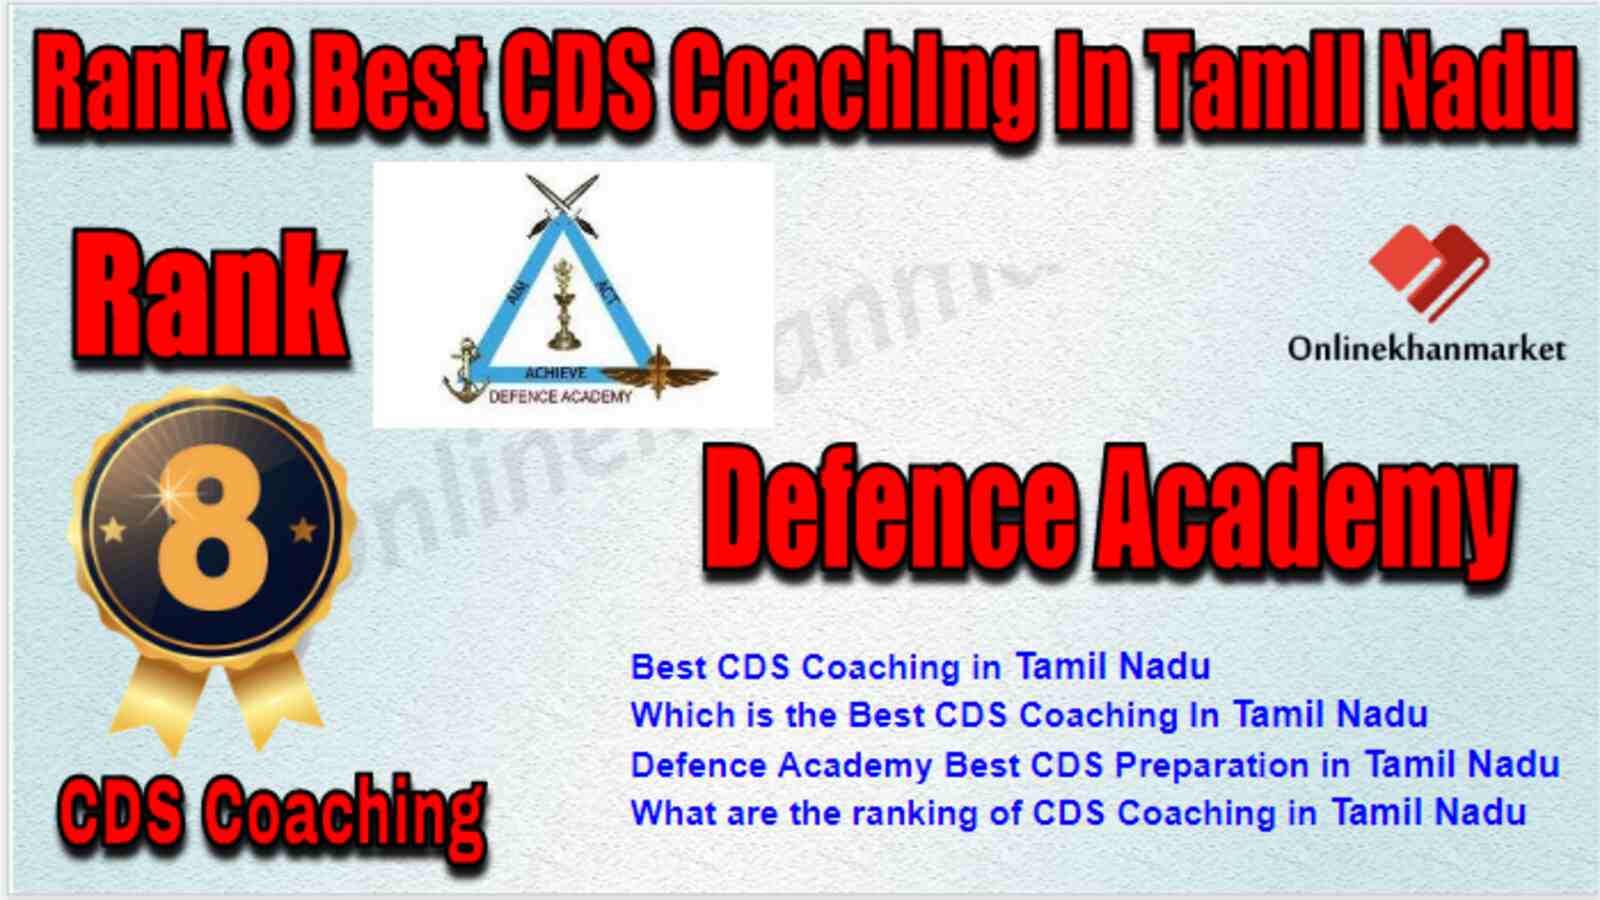 Rank 8 Best CDS Coaching in Tamil Nadu